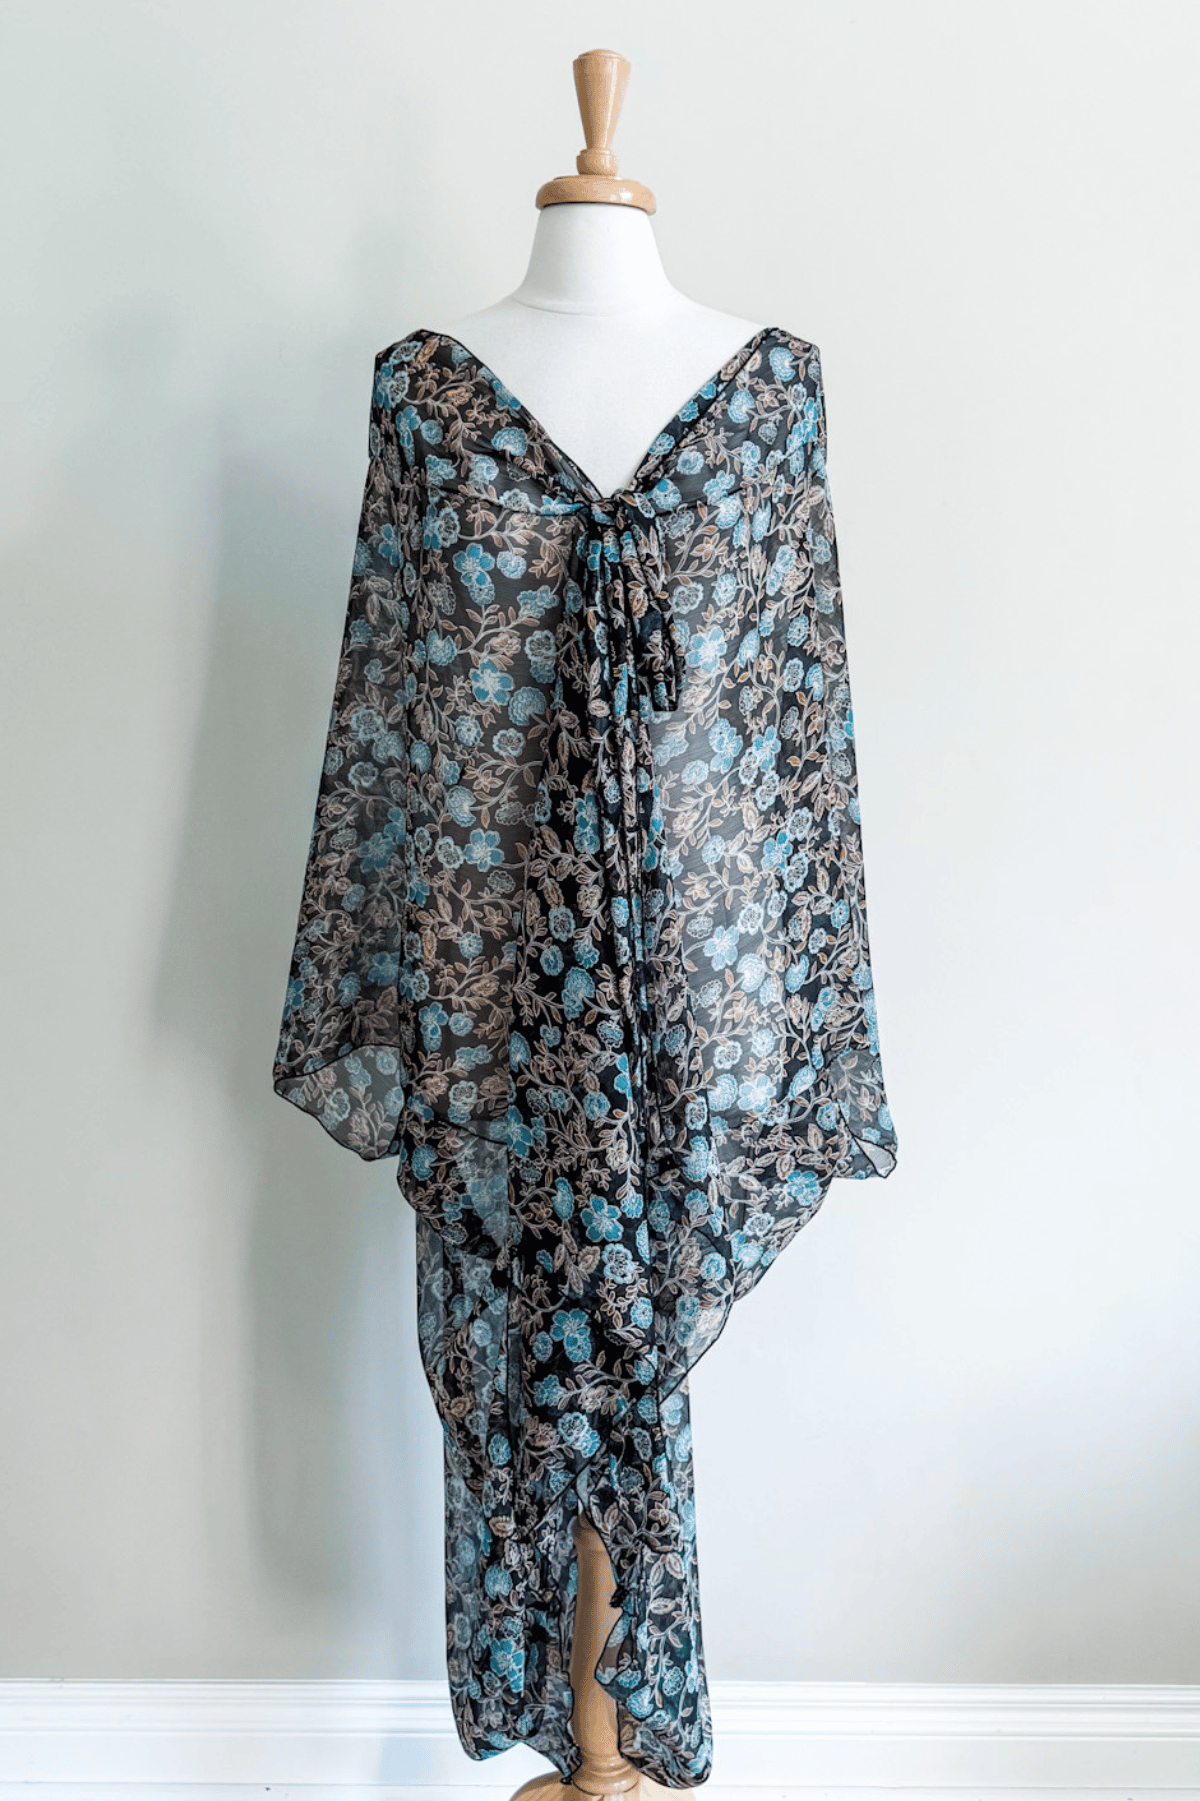 Mariposa Kaftan in Turquoise Blossom print